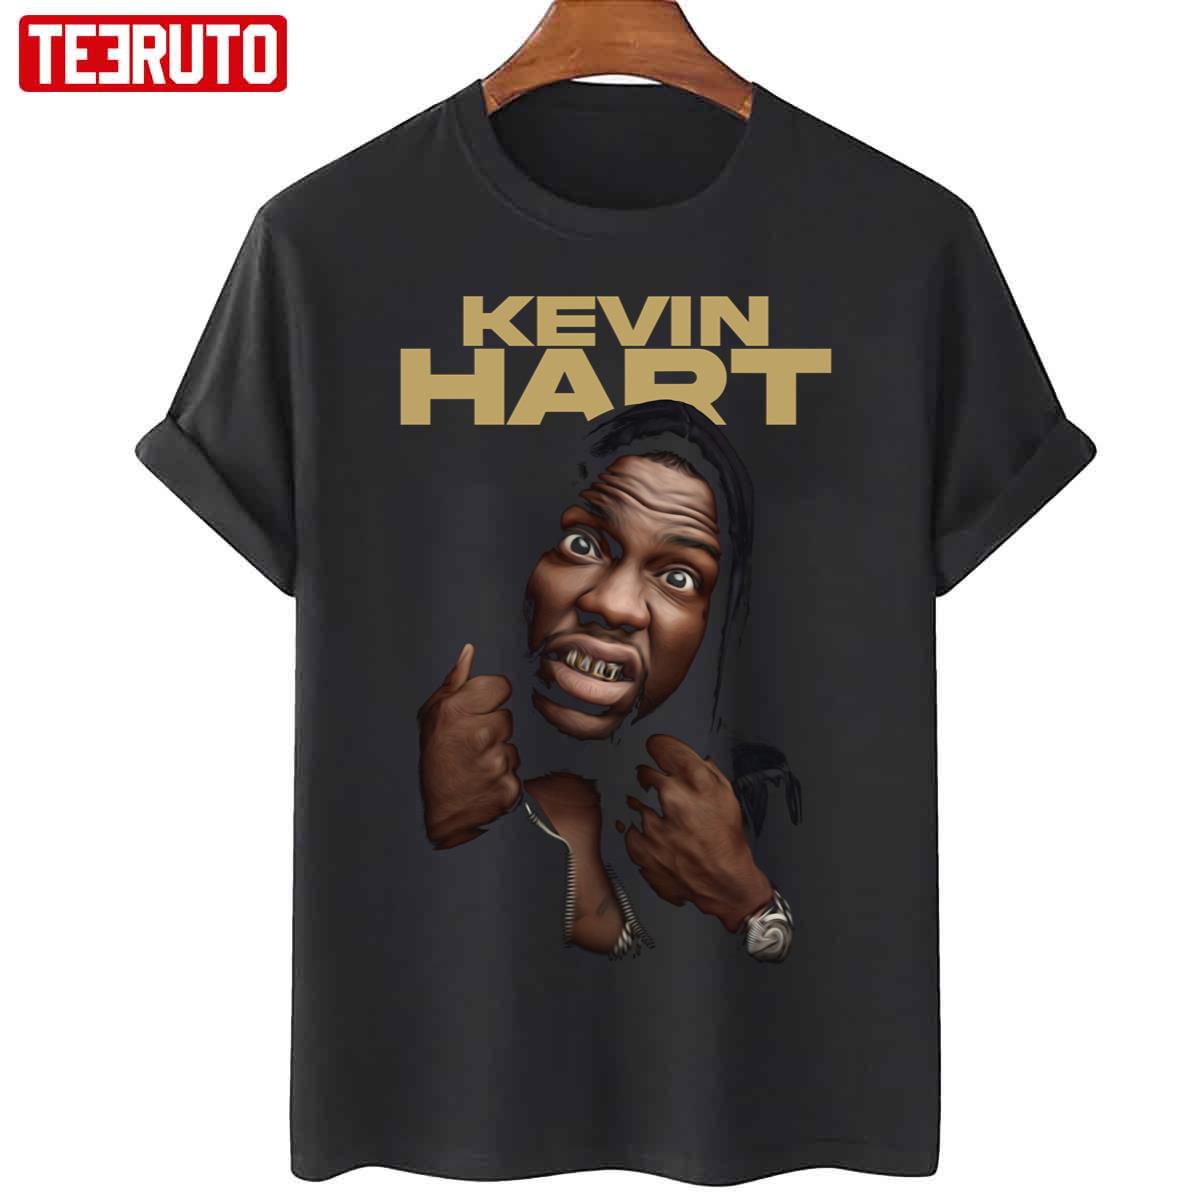 Kevin Hart Funny Unisex T-Shirt - Teeruto